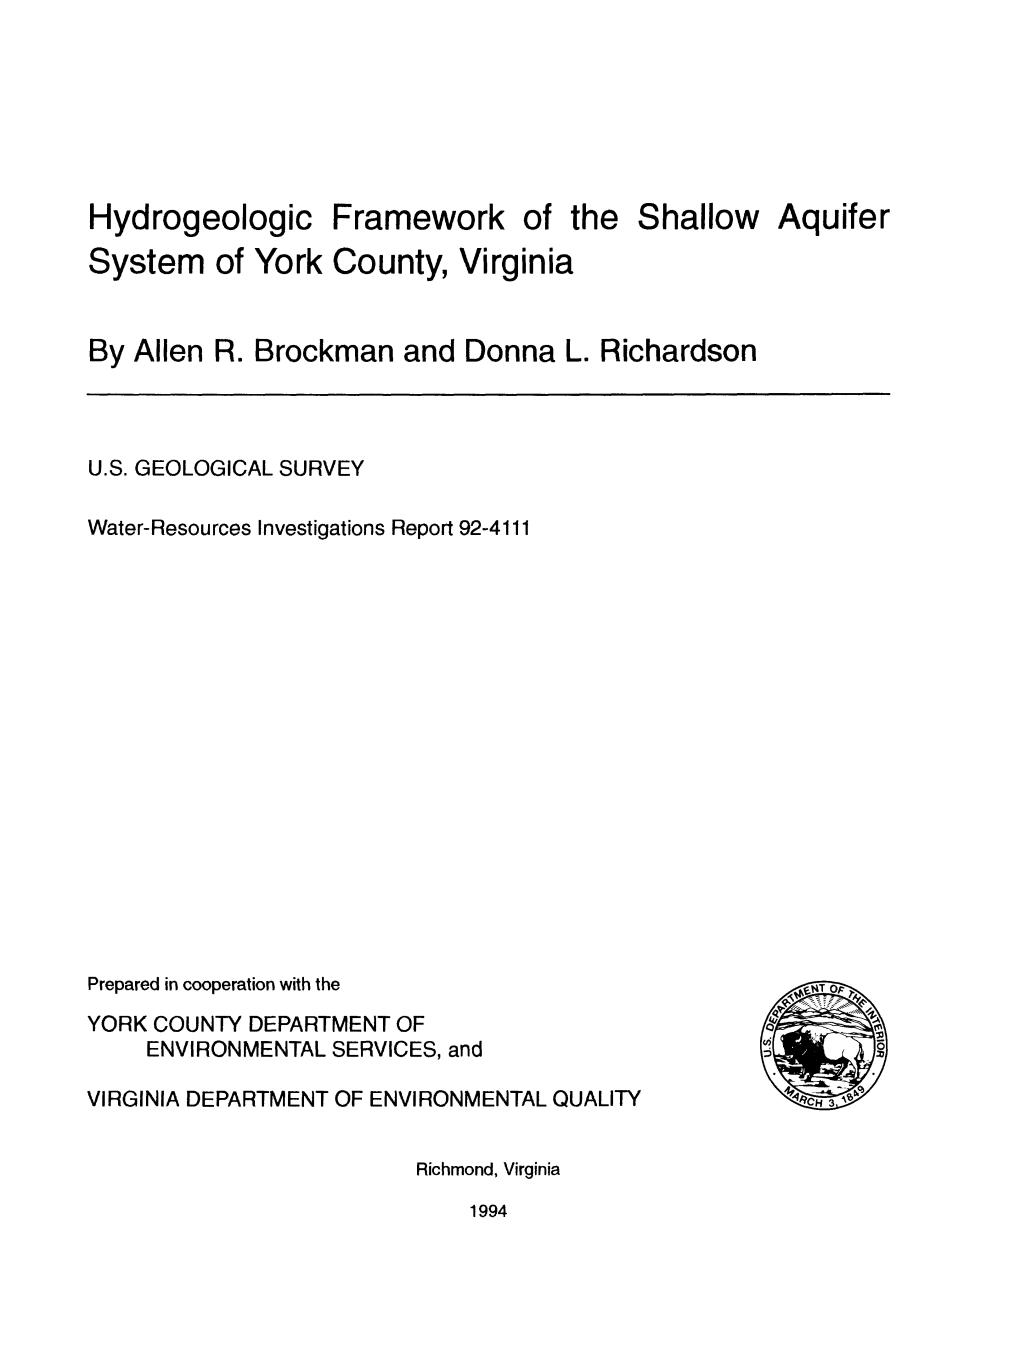 Hydrogeologic Framework of the Shallow Aquifer System of York County, Virginia